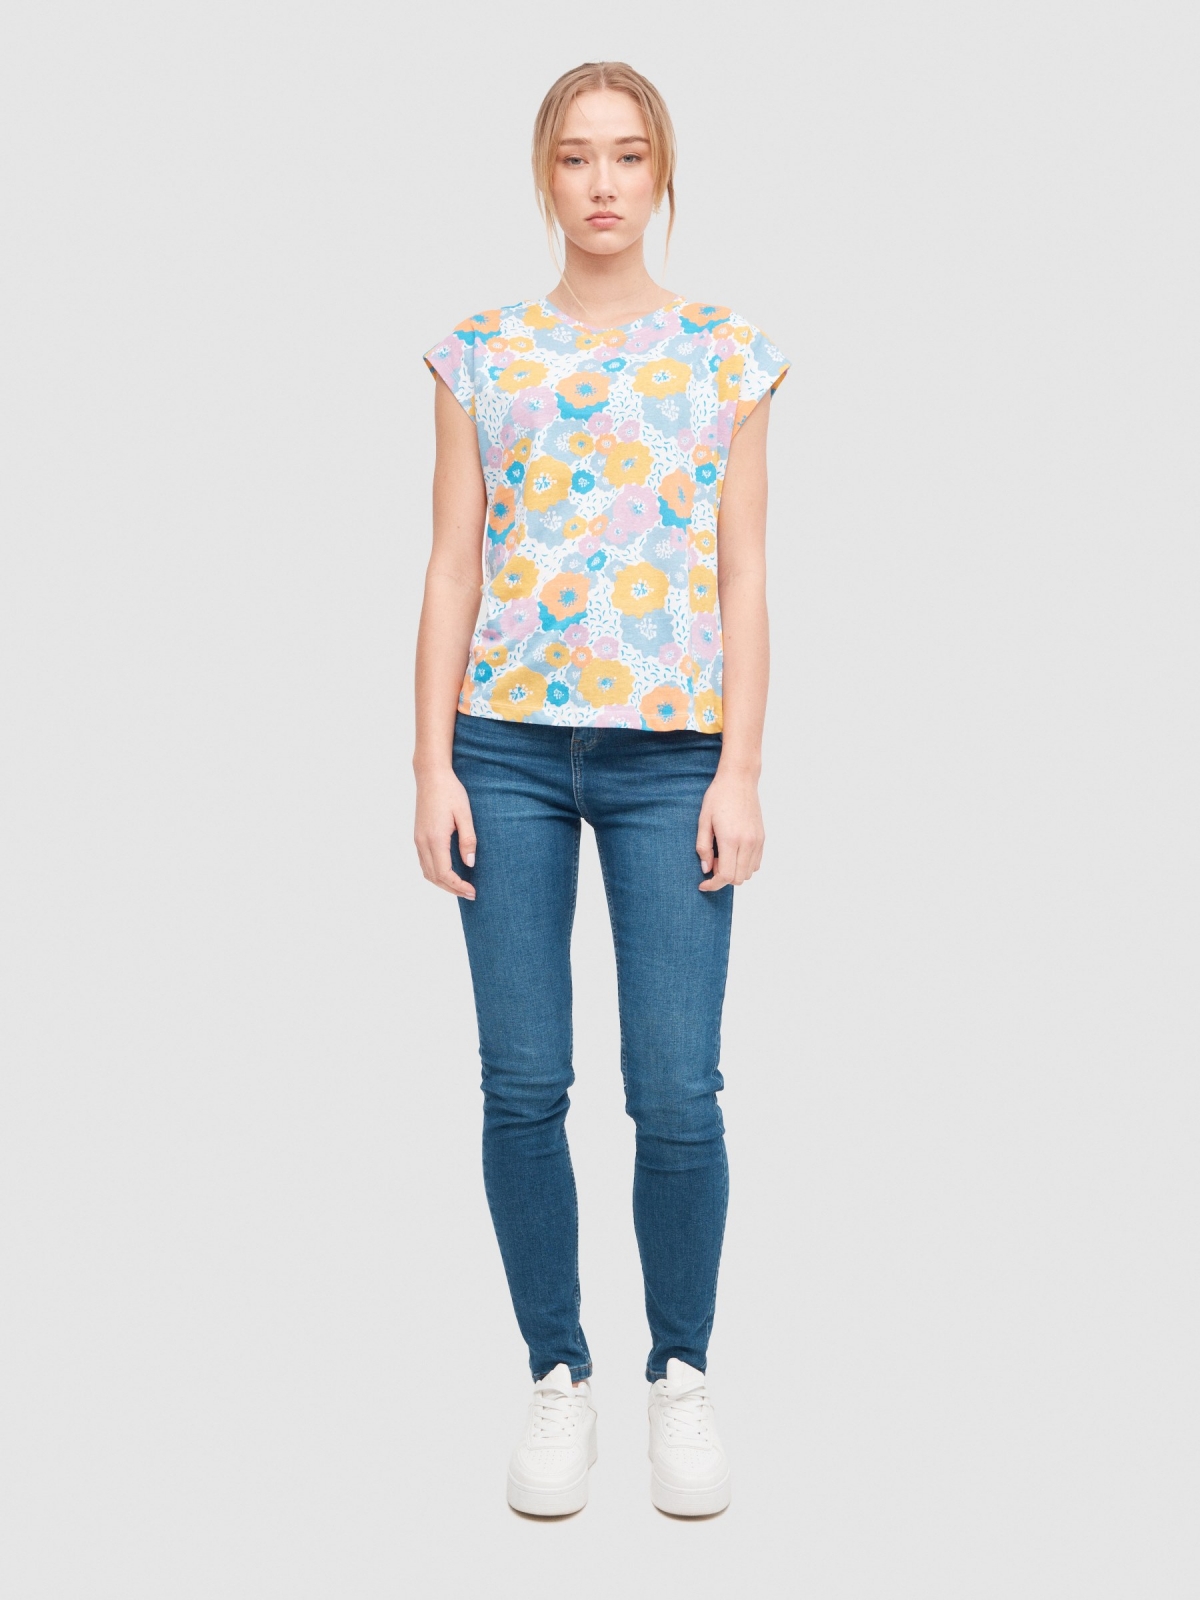 Flower print t-shirt multicolor front view